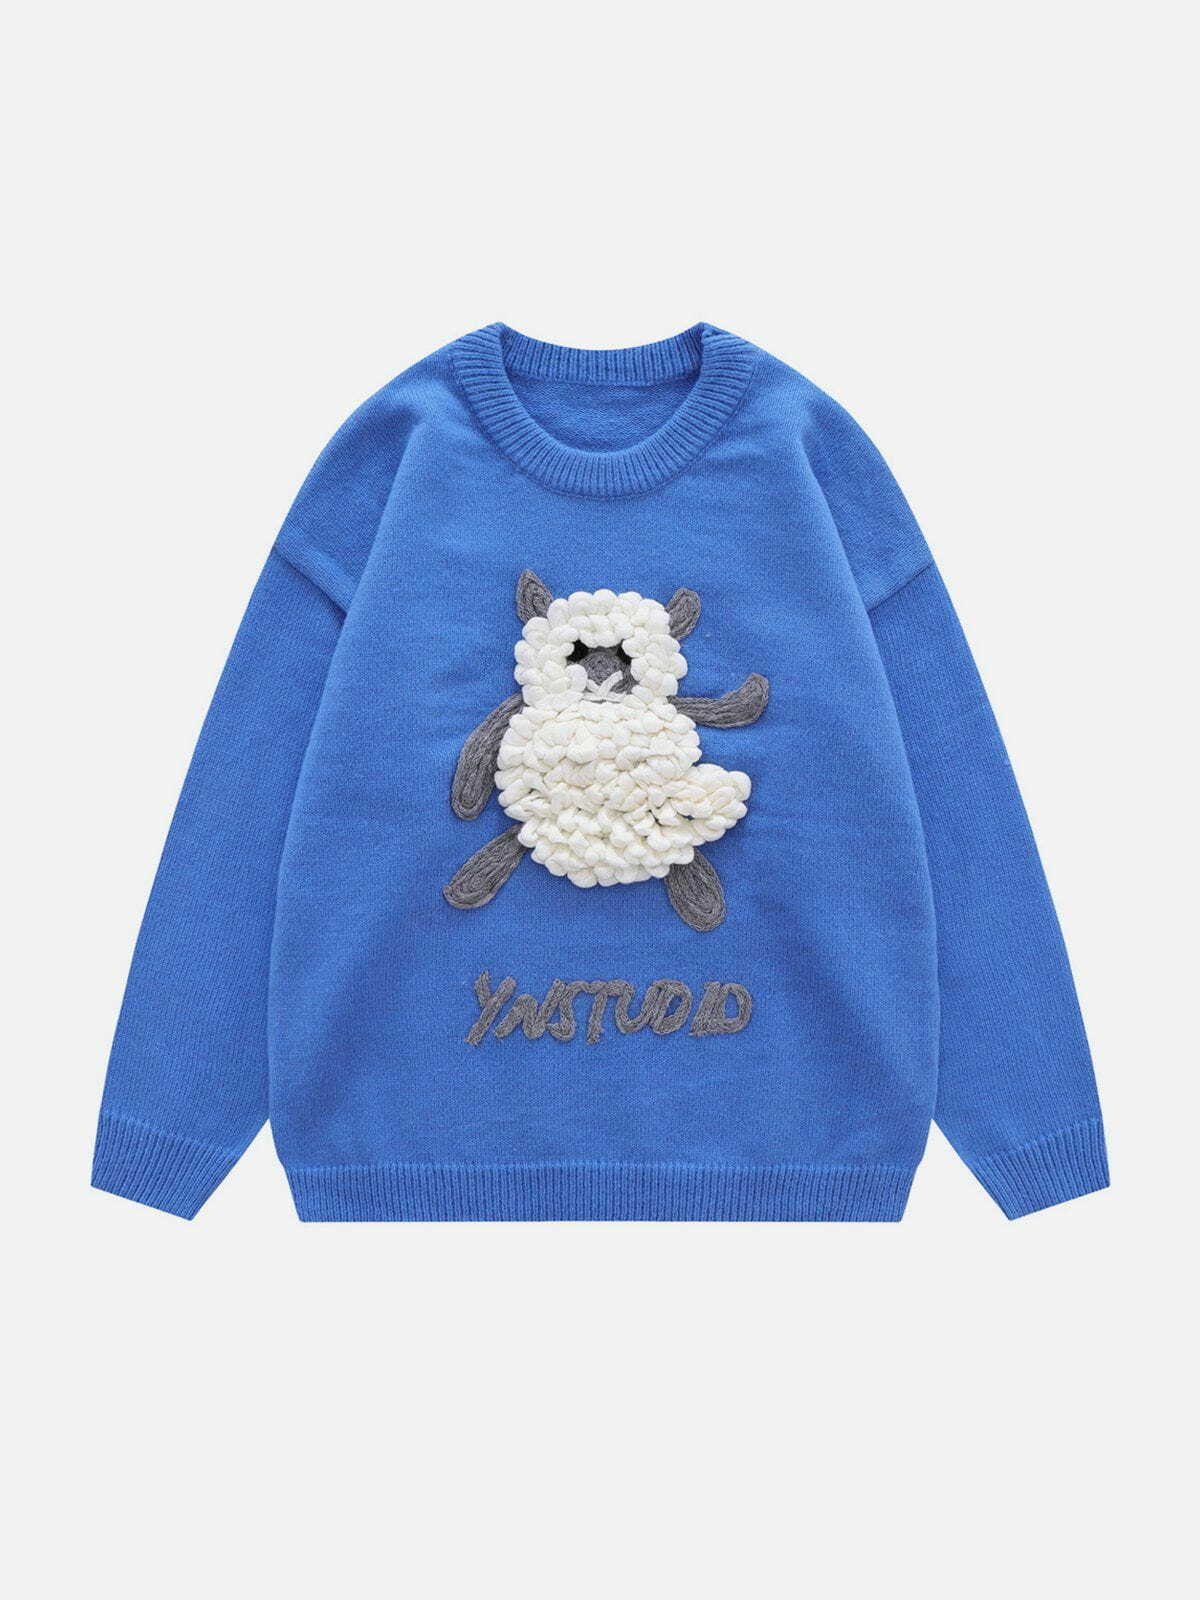 plush lamb print sweater cozy & quirky streetwear 7680